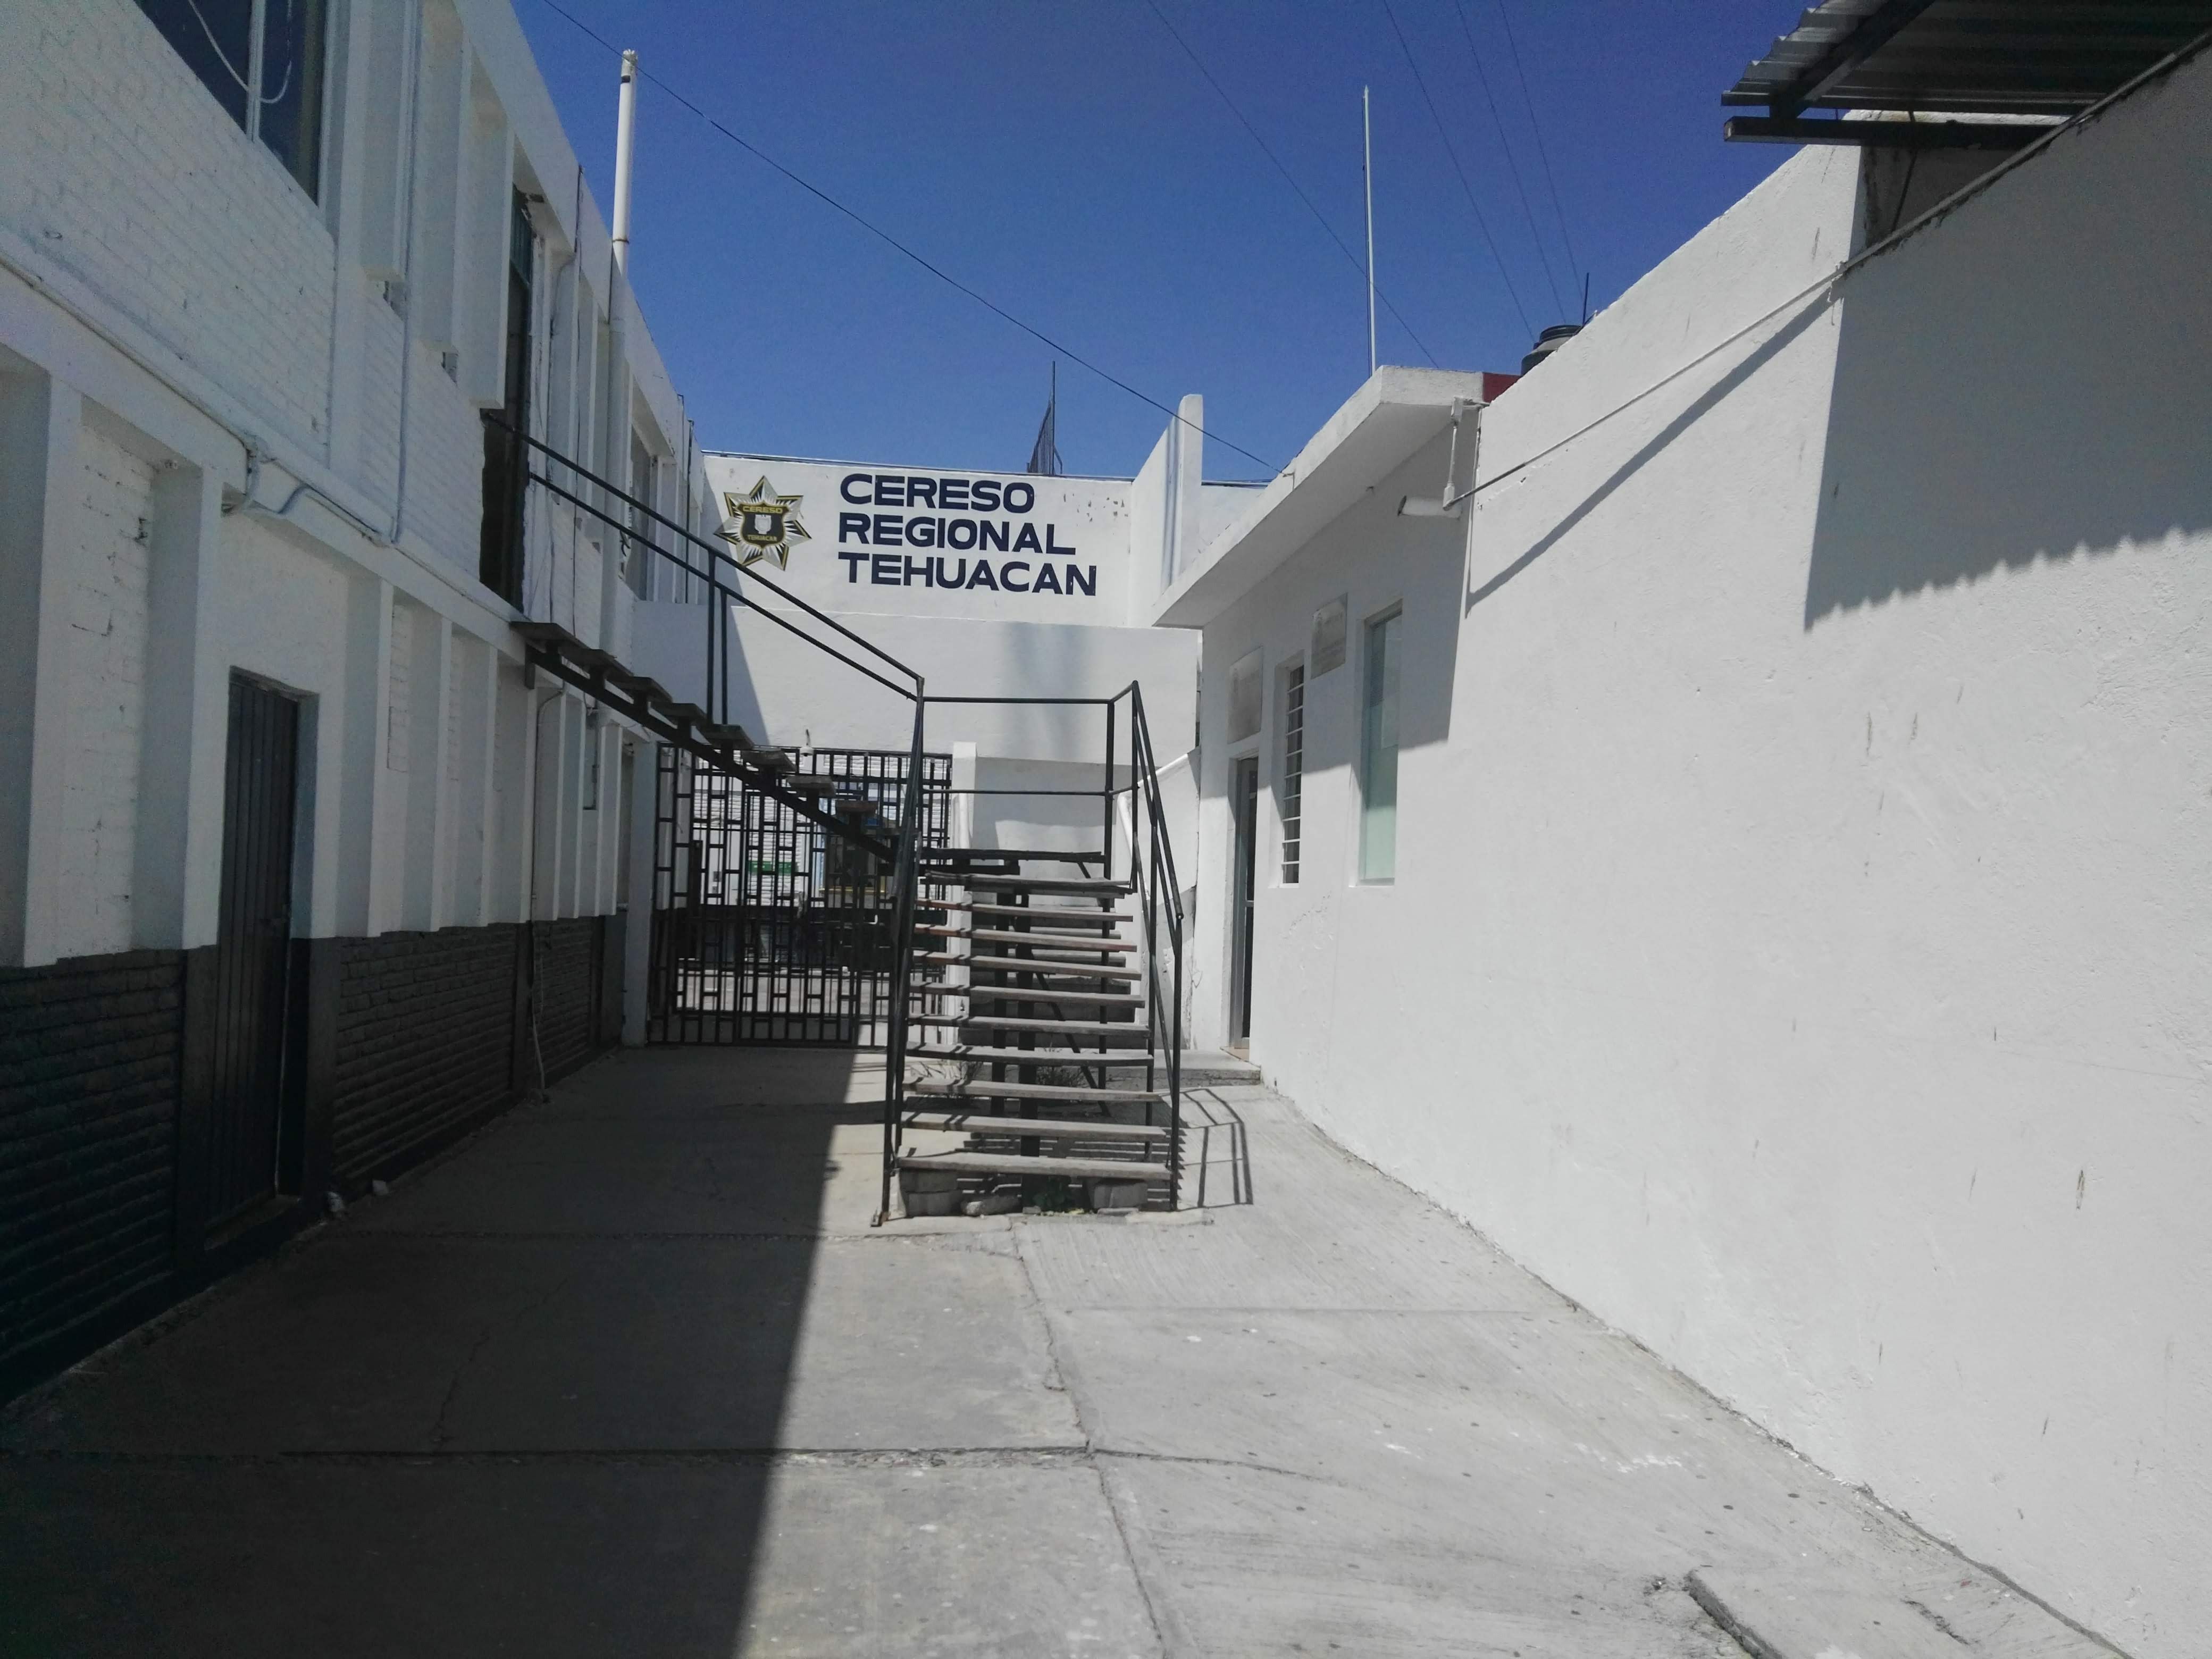 Descartan casos de coronavirus en el penal de Tehuacán